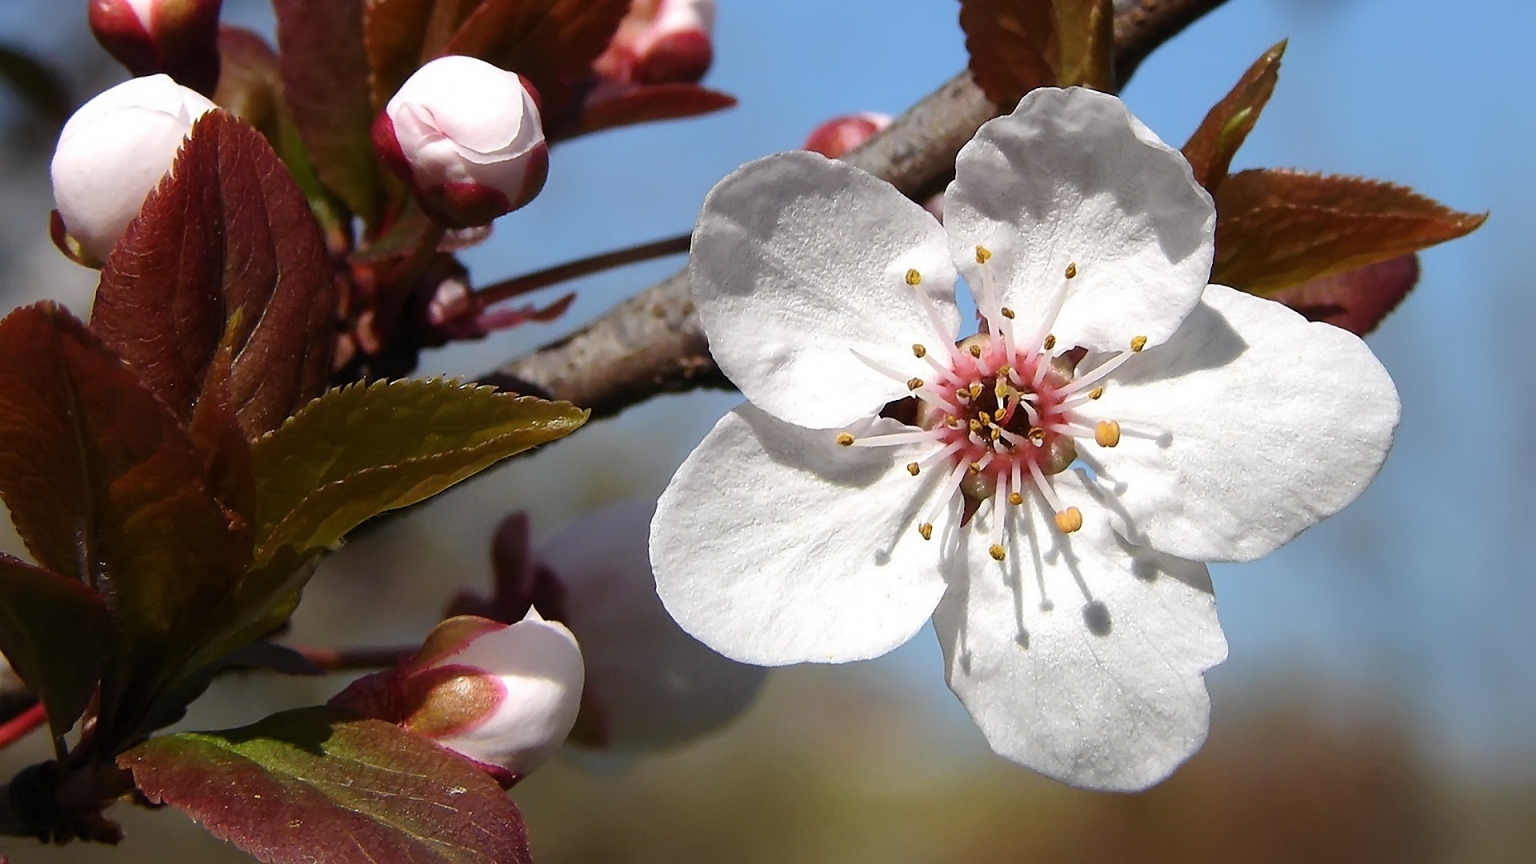 Plum tree blossoms for 1536 x 864 HDTV resolution